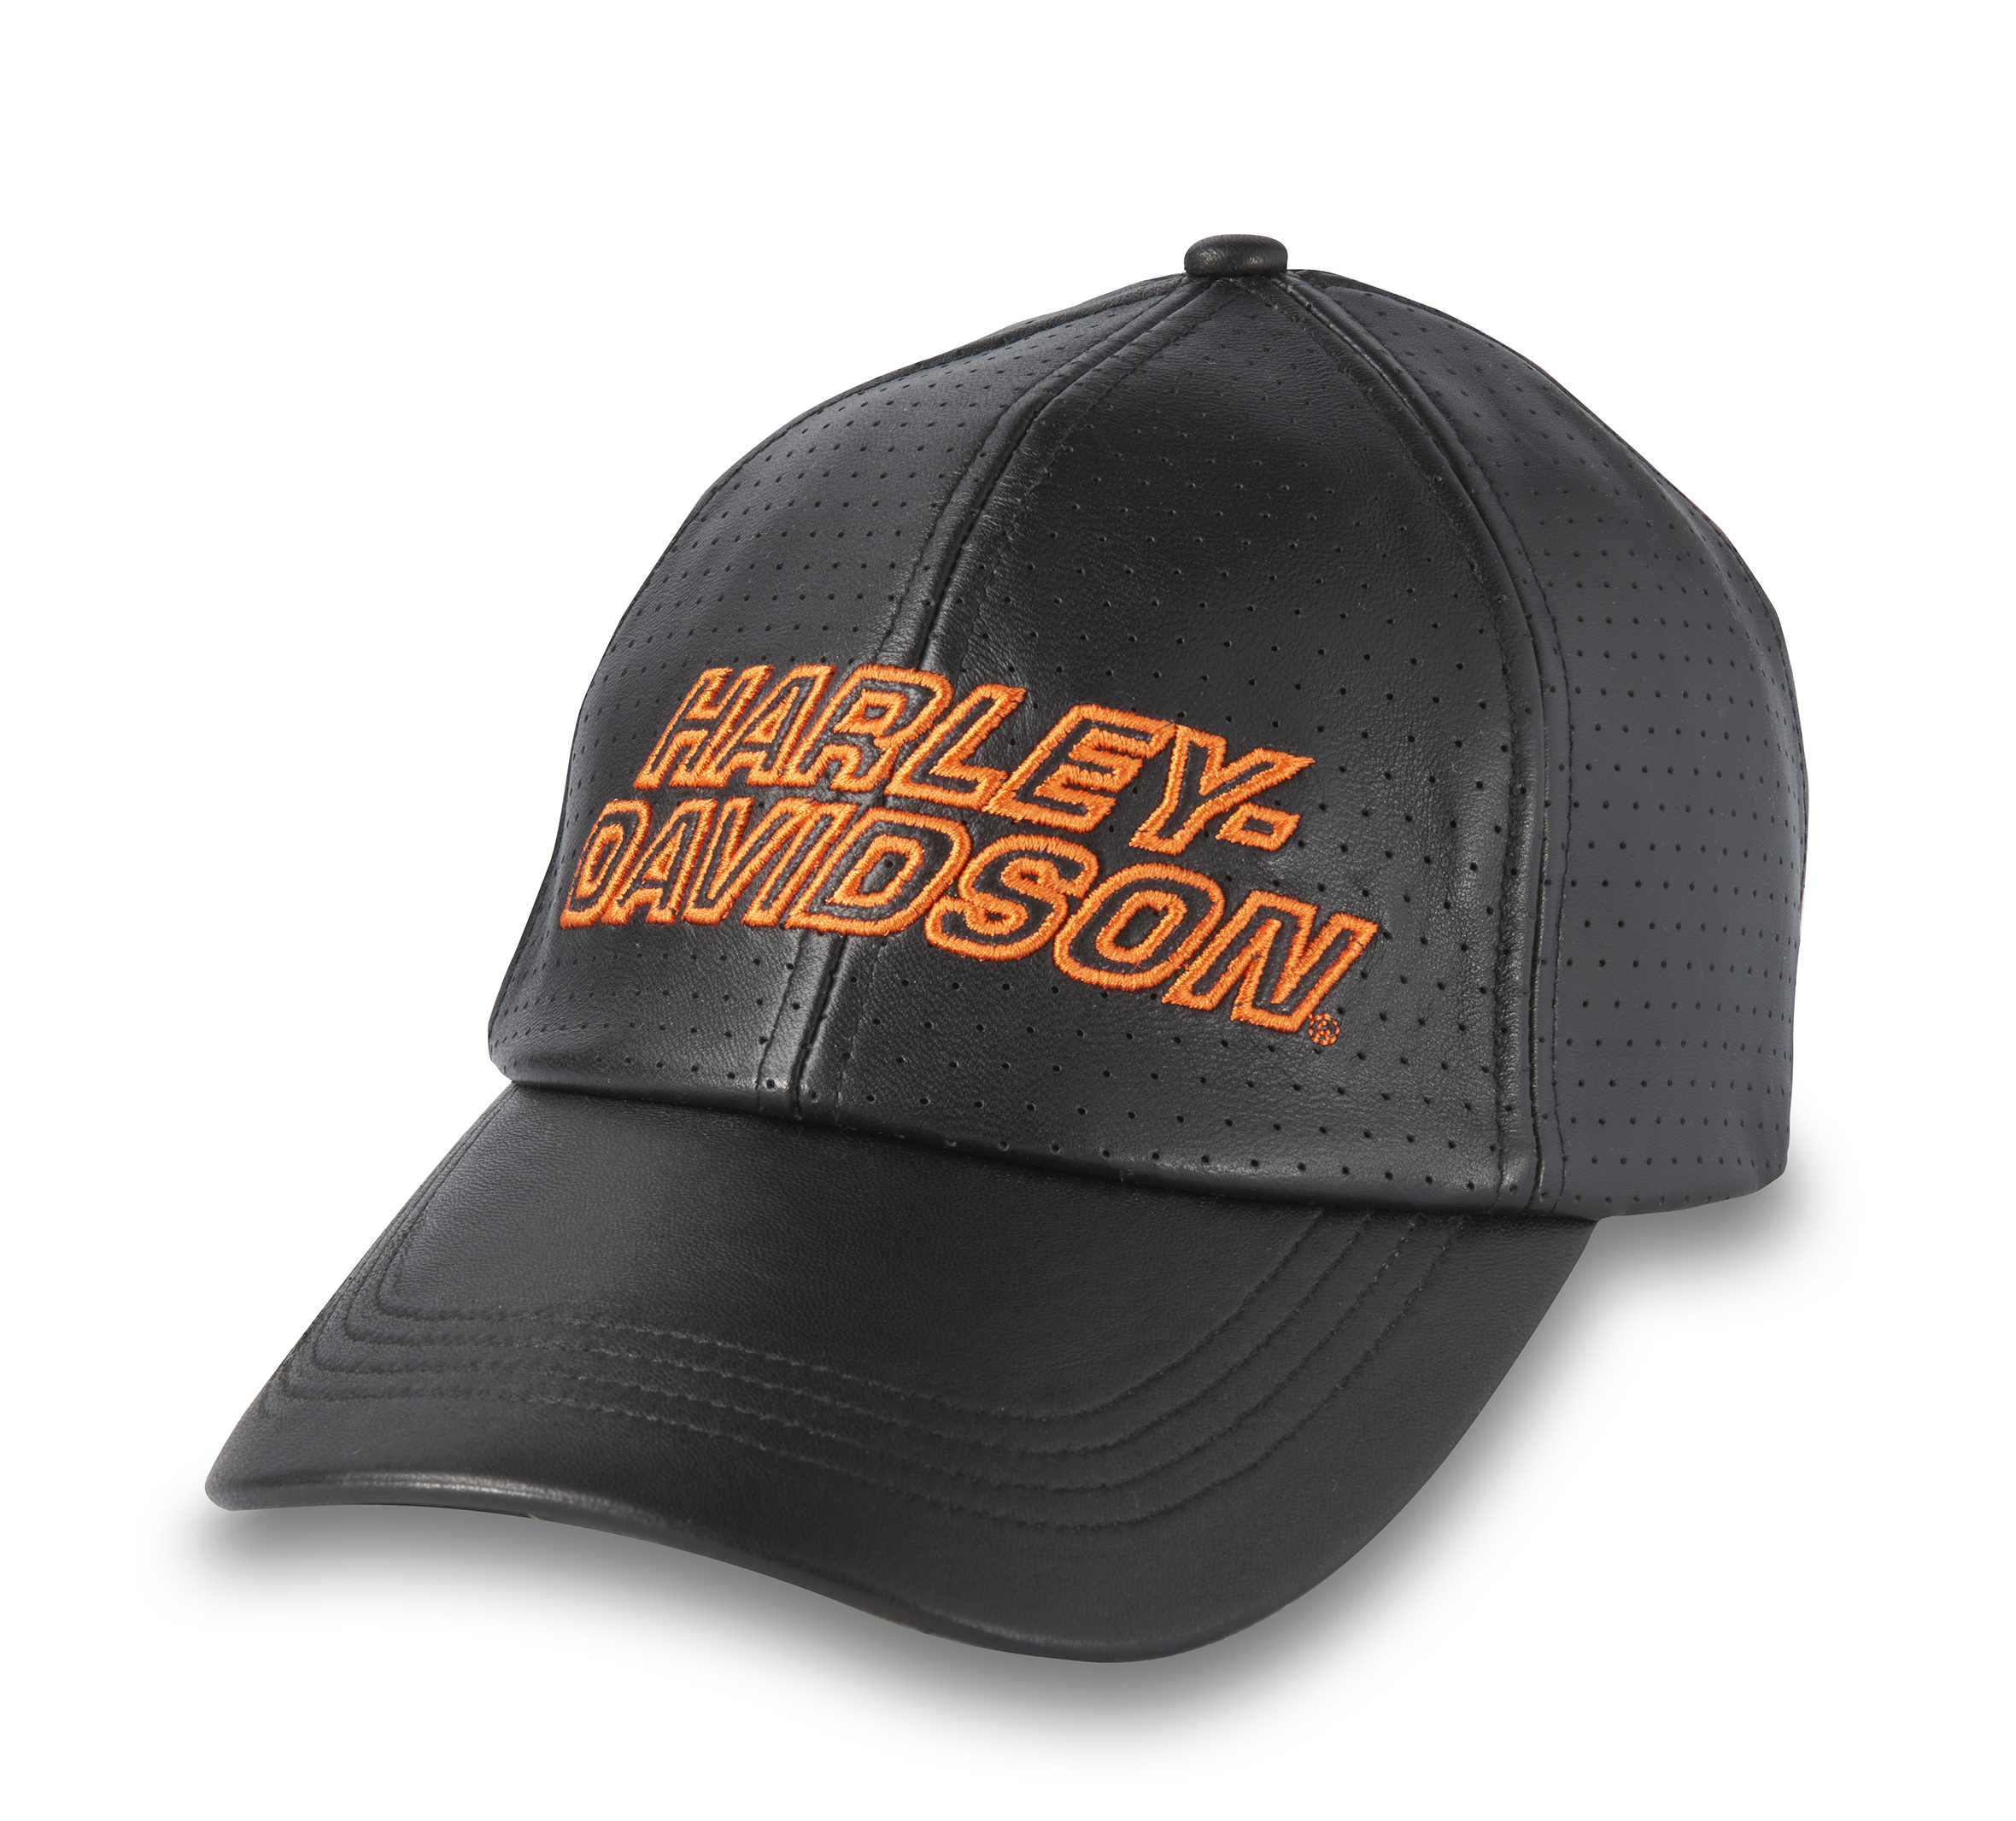 Harley-Davidson Factory Perforated Leather Baseball Cap, Black